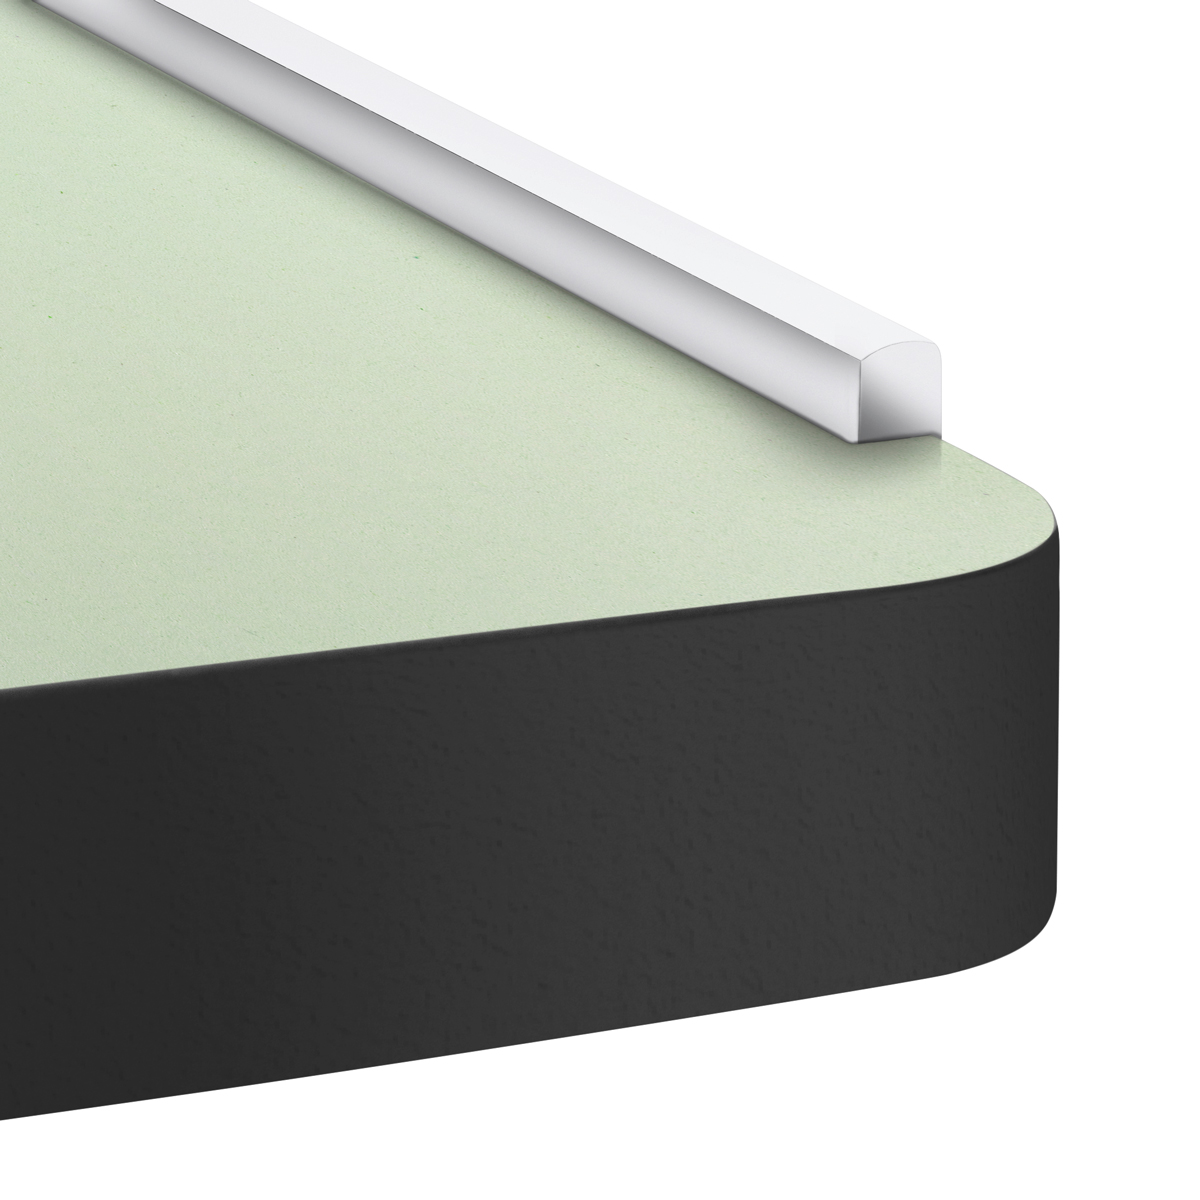 Bench top 100 x 60 x 4 cm, surface Softstop light green, border mineral material white, optional equipment for
Ergolift Evolution